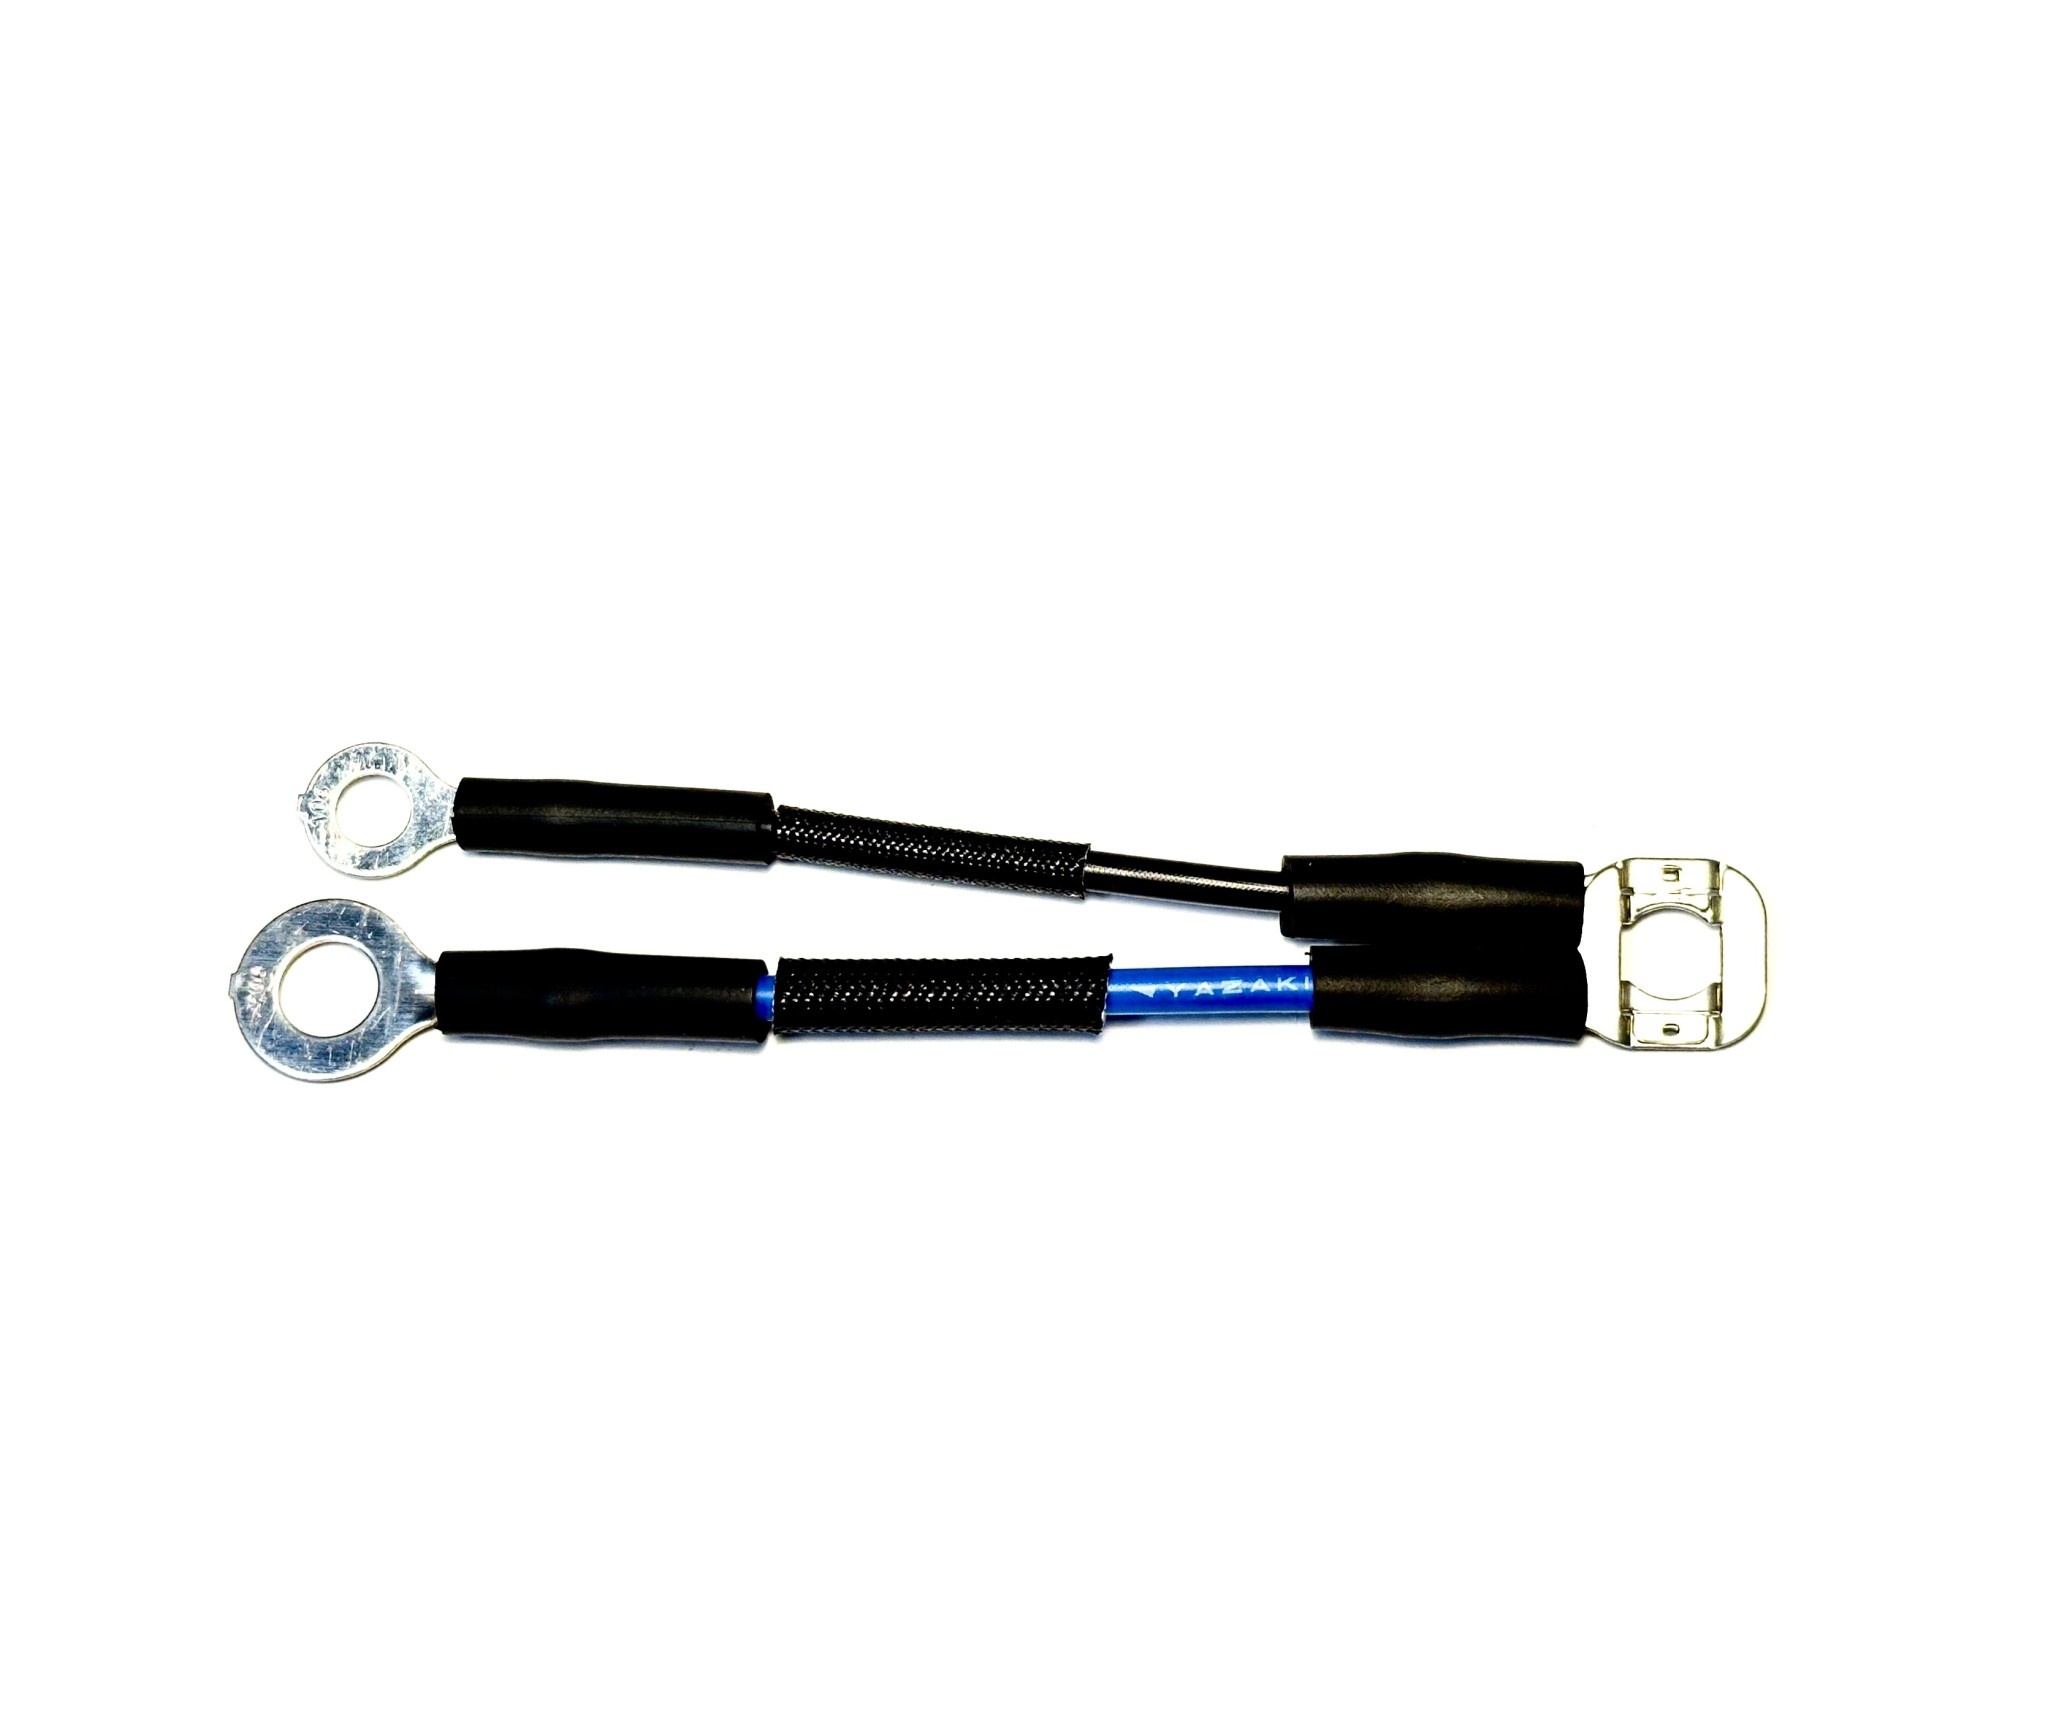 Fusible Link - 2 wires (blue, black) for 12V HDJ80 General Markets (L=110, Main, Glow) - 90982-08267